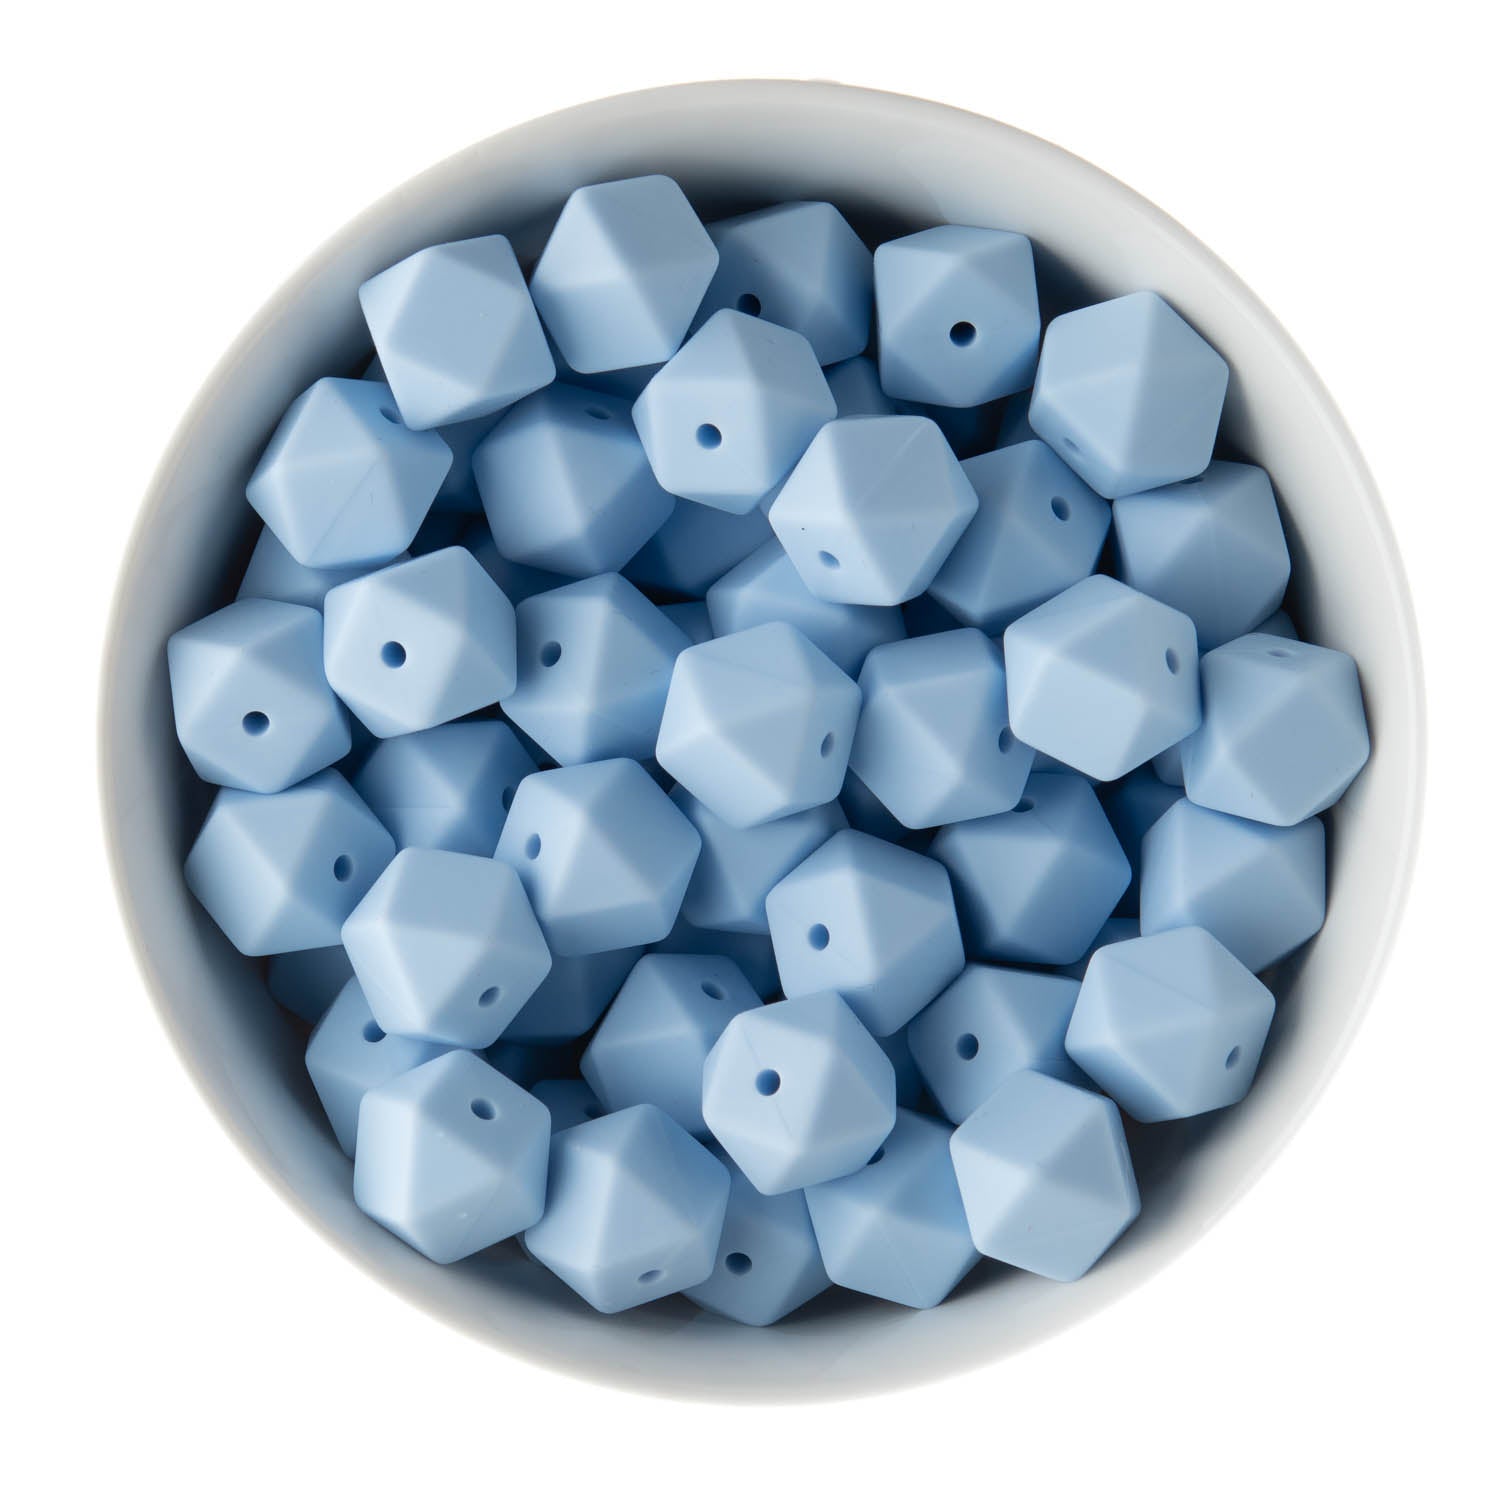 Silicone Beads Hexagons 14mm | Shop Cara & Co Premium Craft Supplies ...